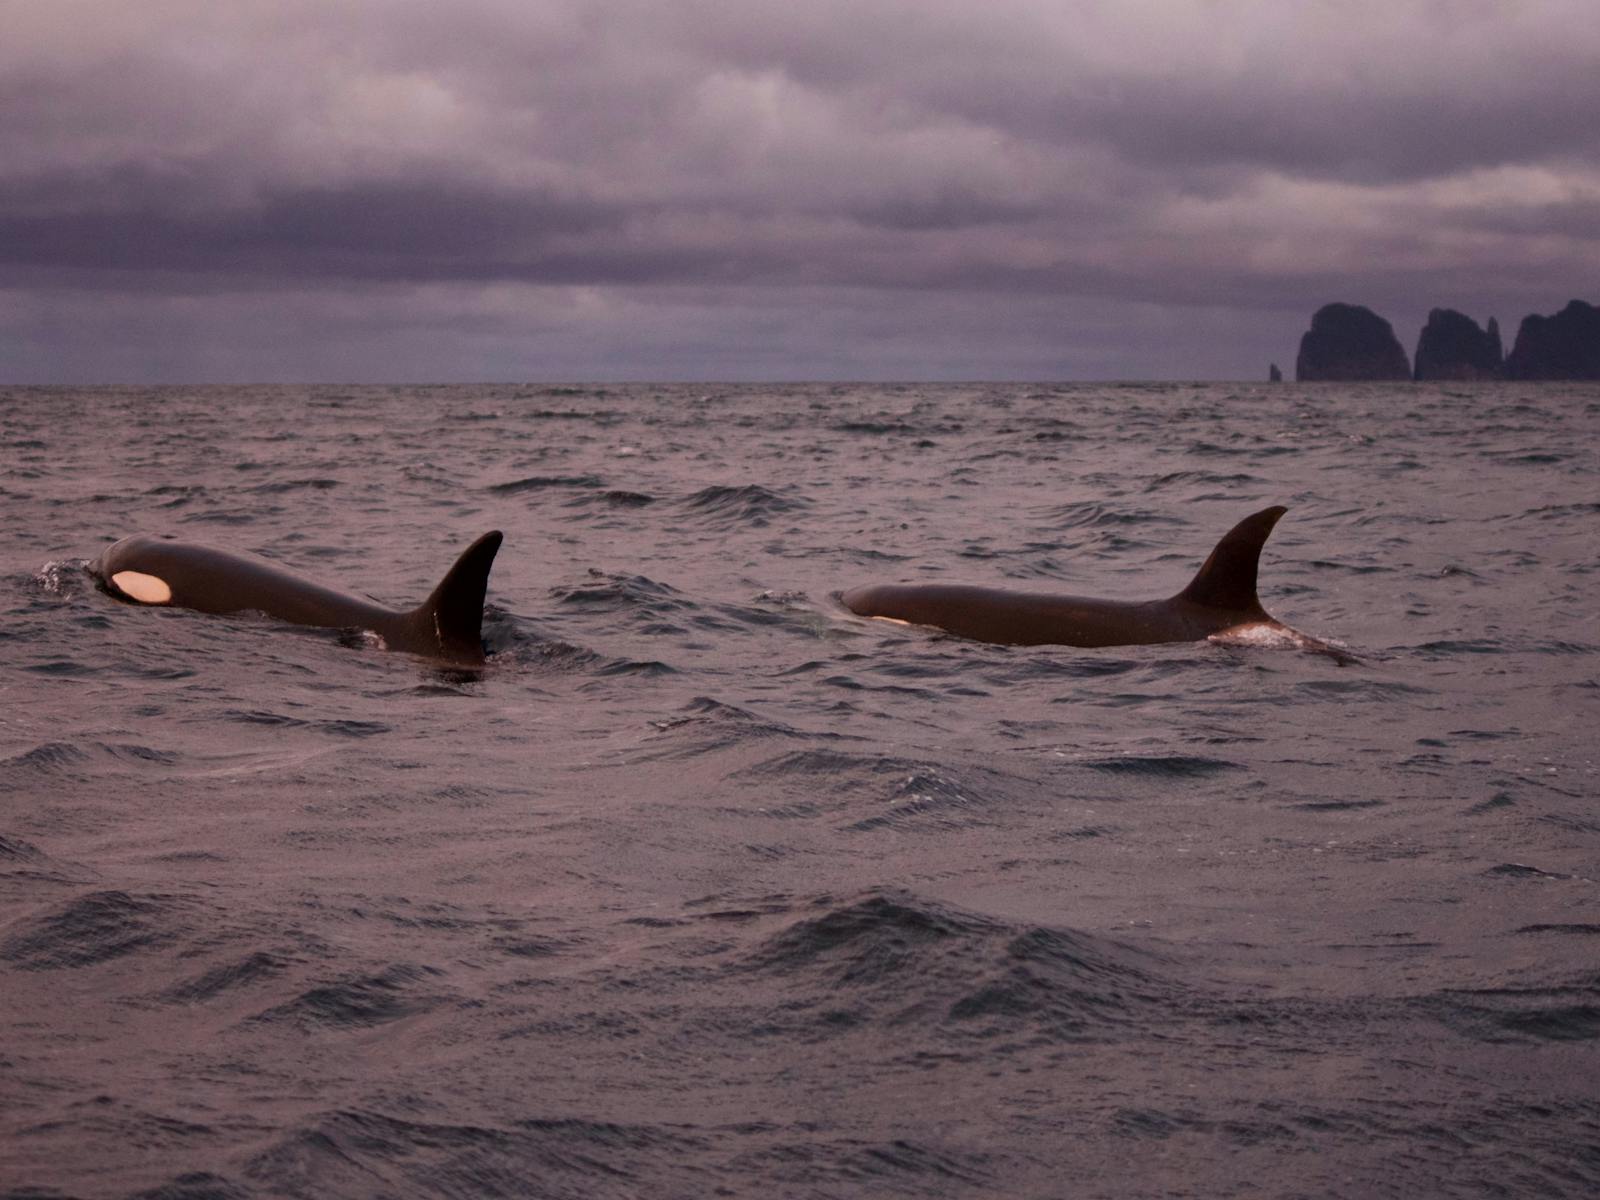 Orcas off the coast of Tasman Peninsula.